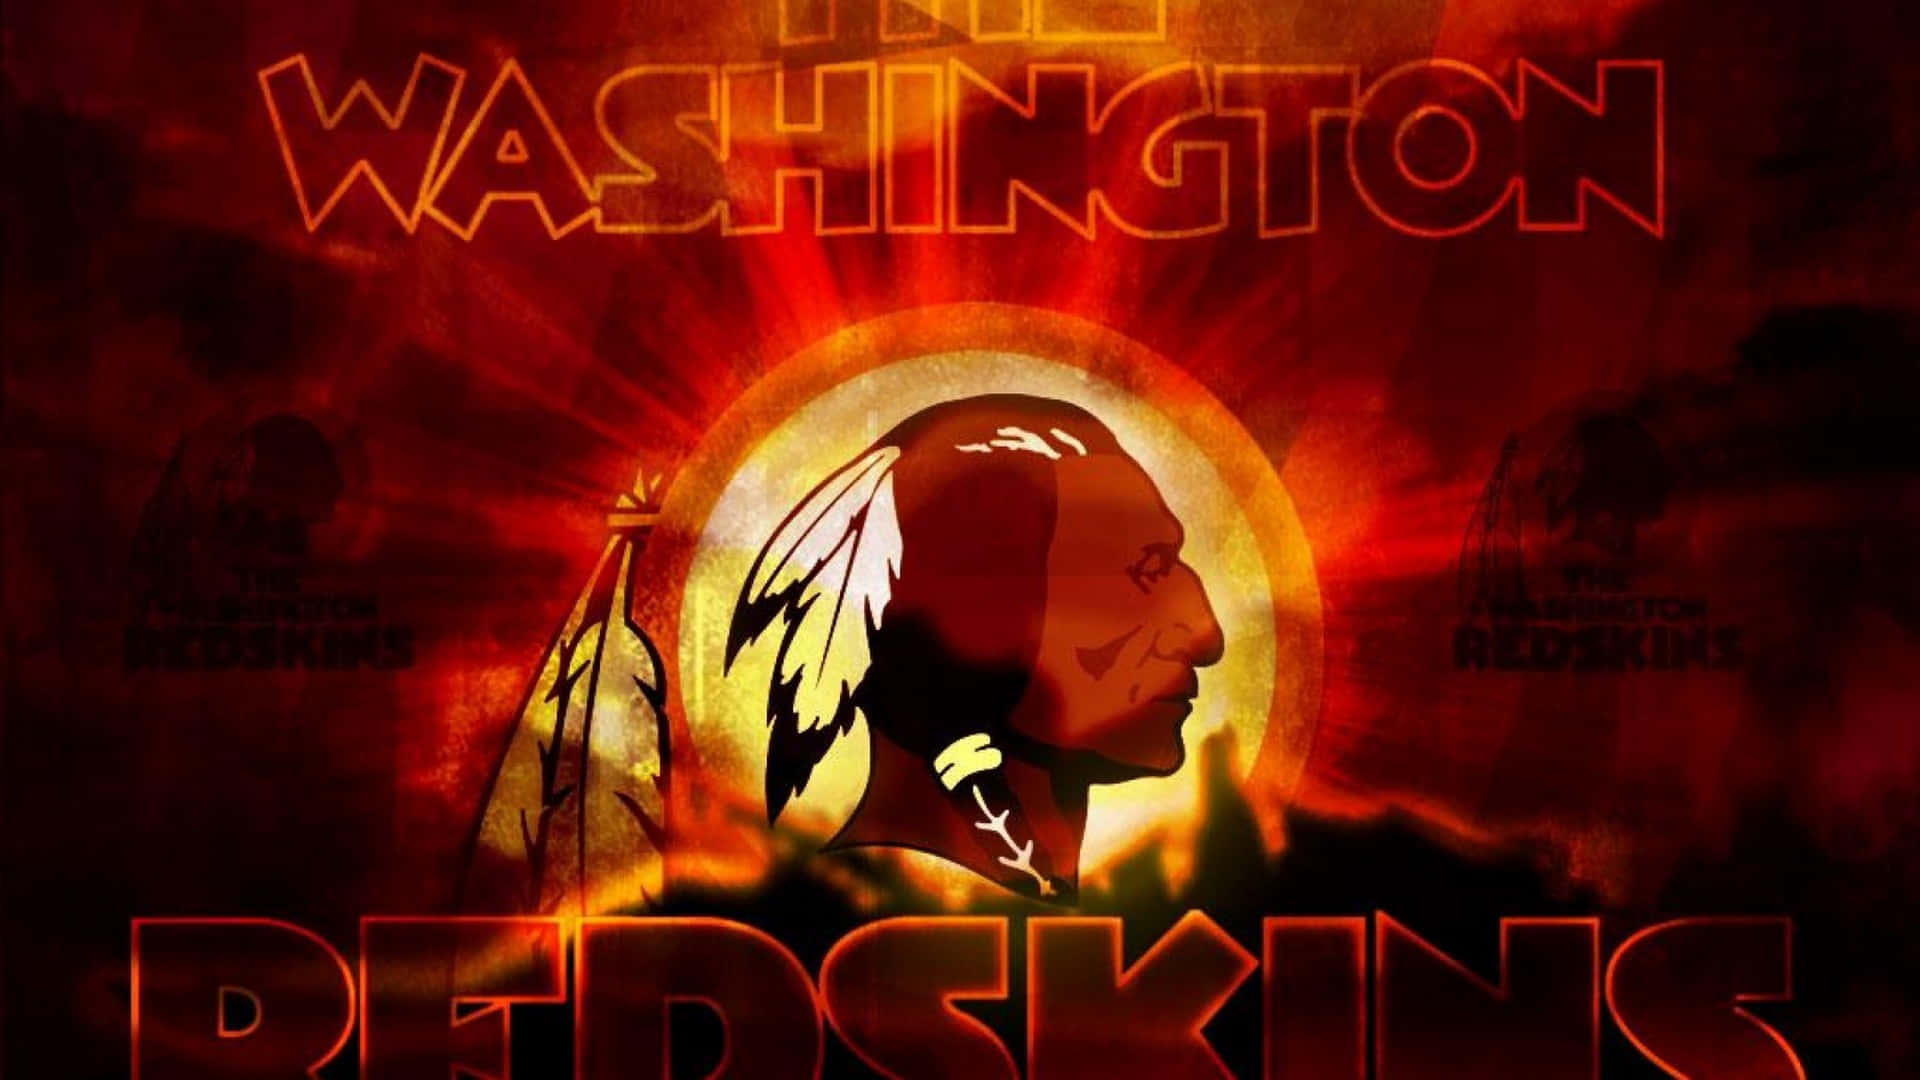 Washington Football Team in action on the field Wallpaper